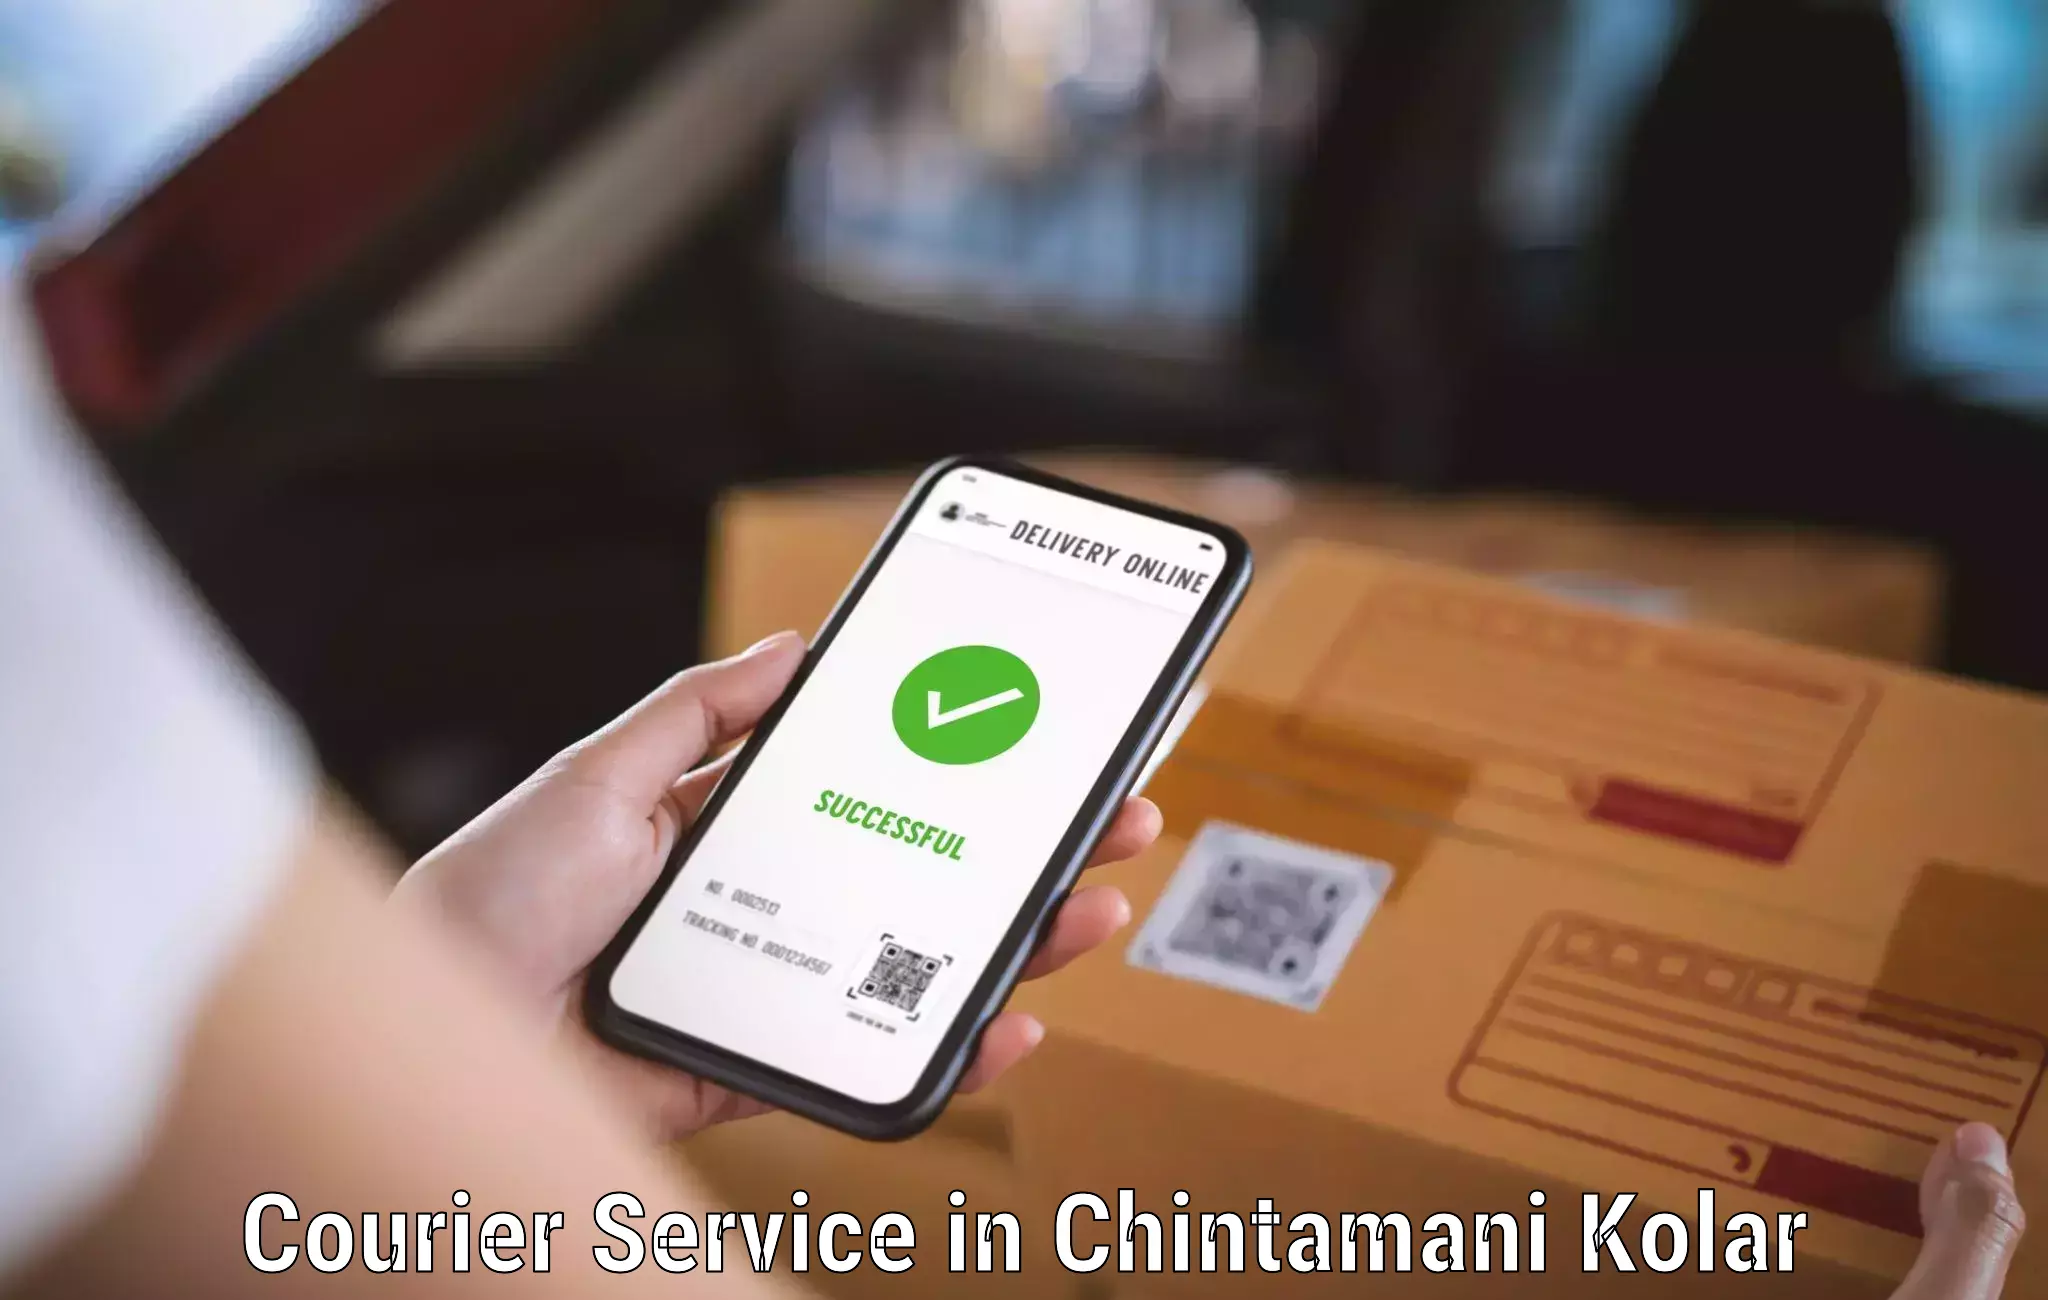 Nationwide shipping services in Chintamani Kolar